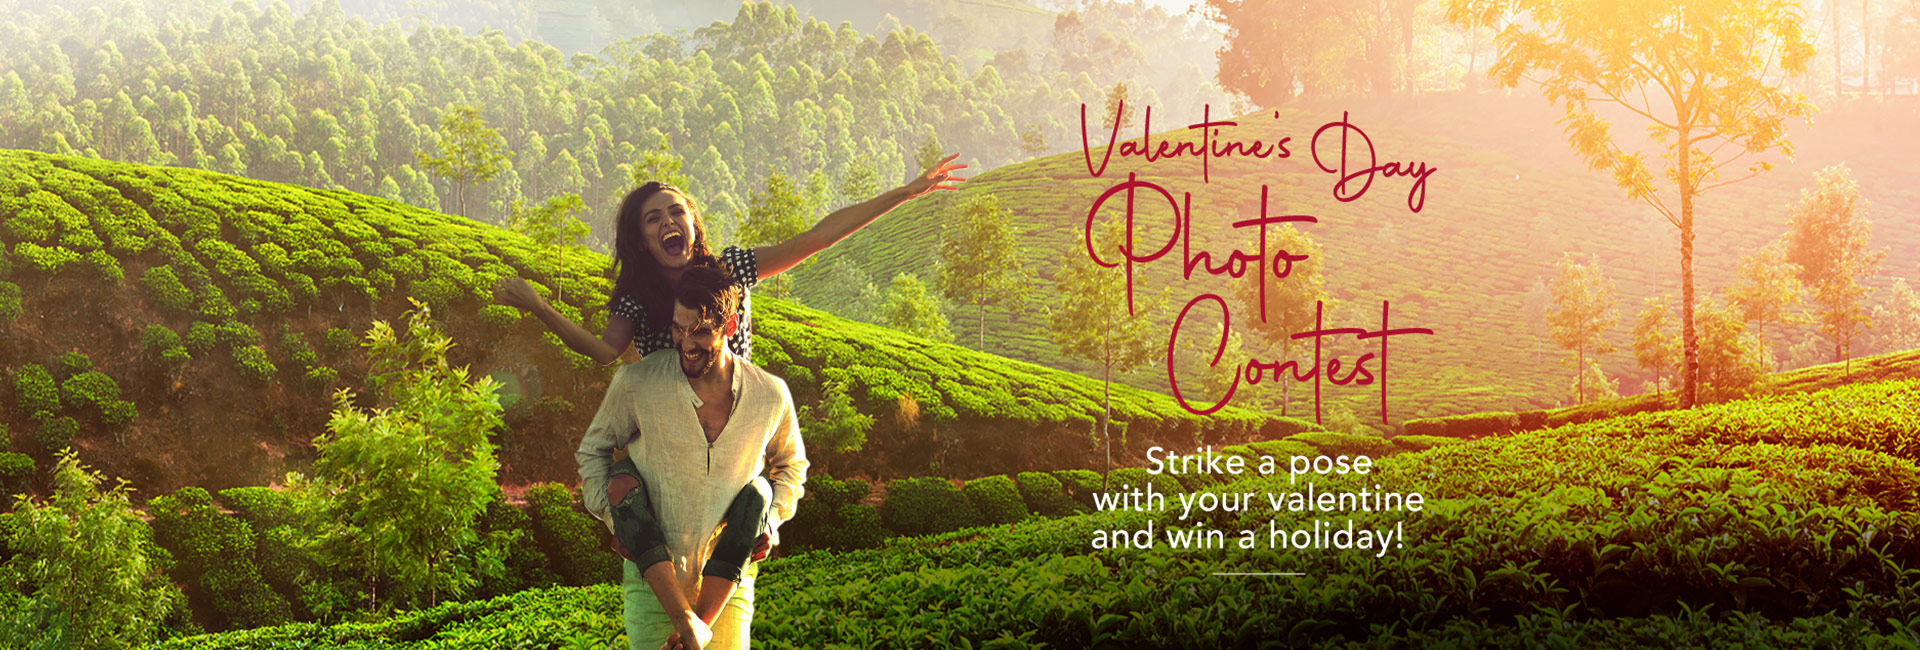 Valentines Day Photo Contest